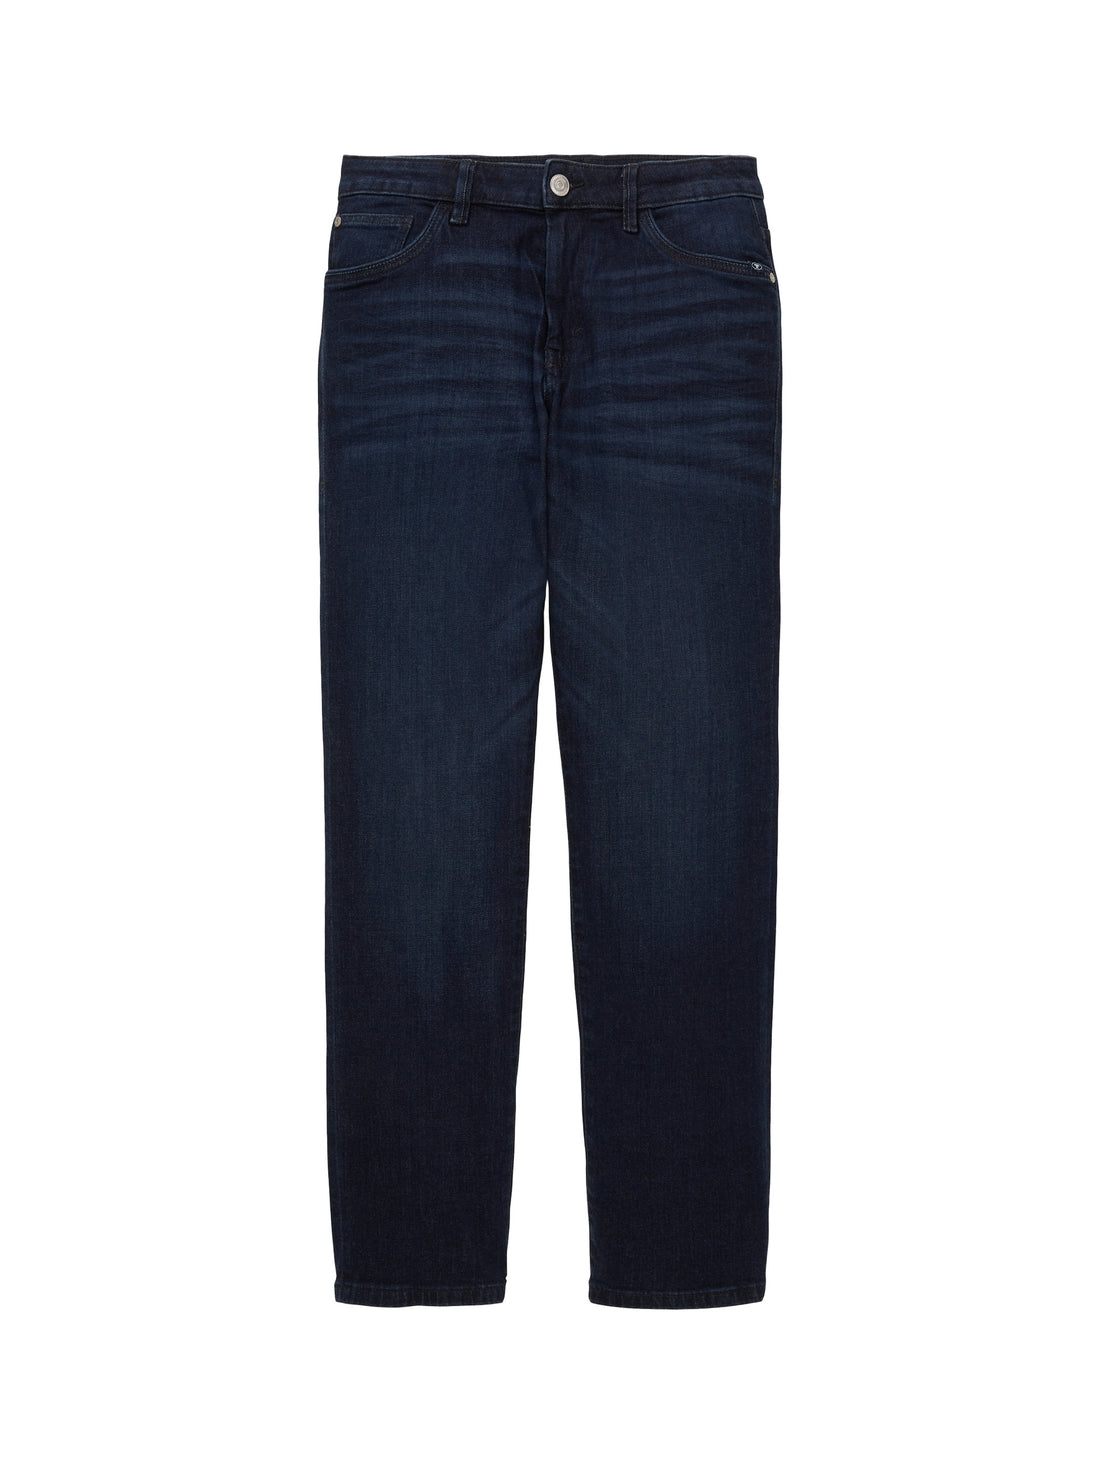 Standard Loose Fit Jeans_1035877_10138_01